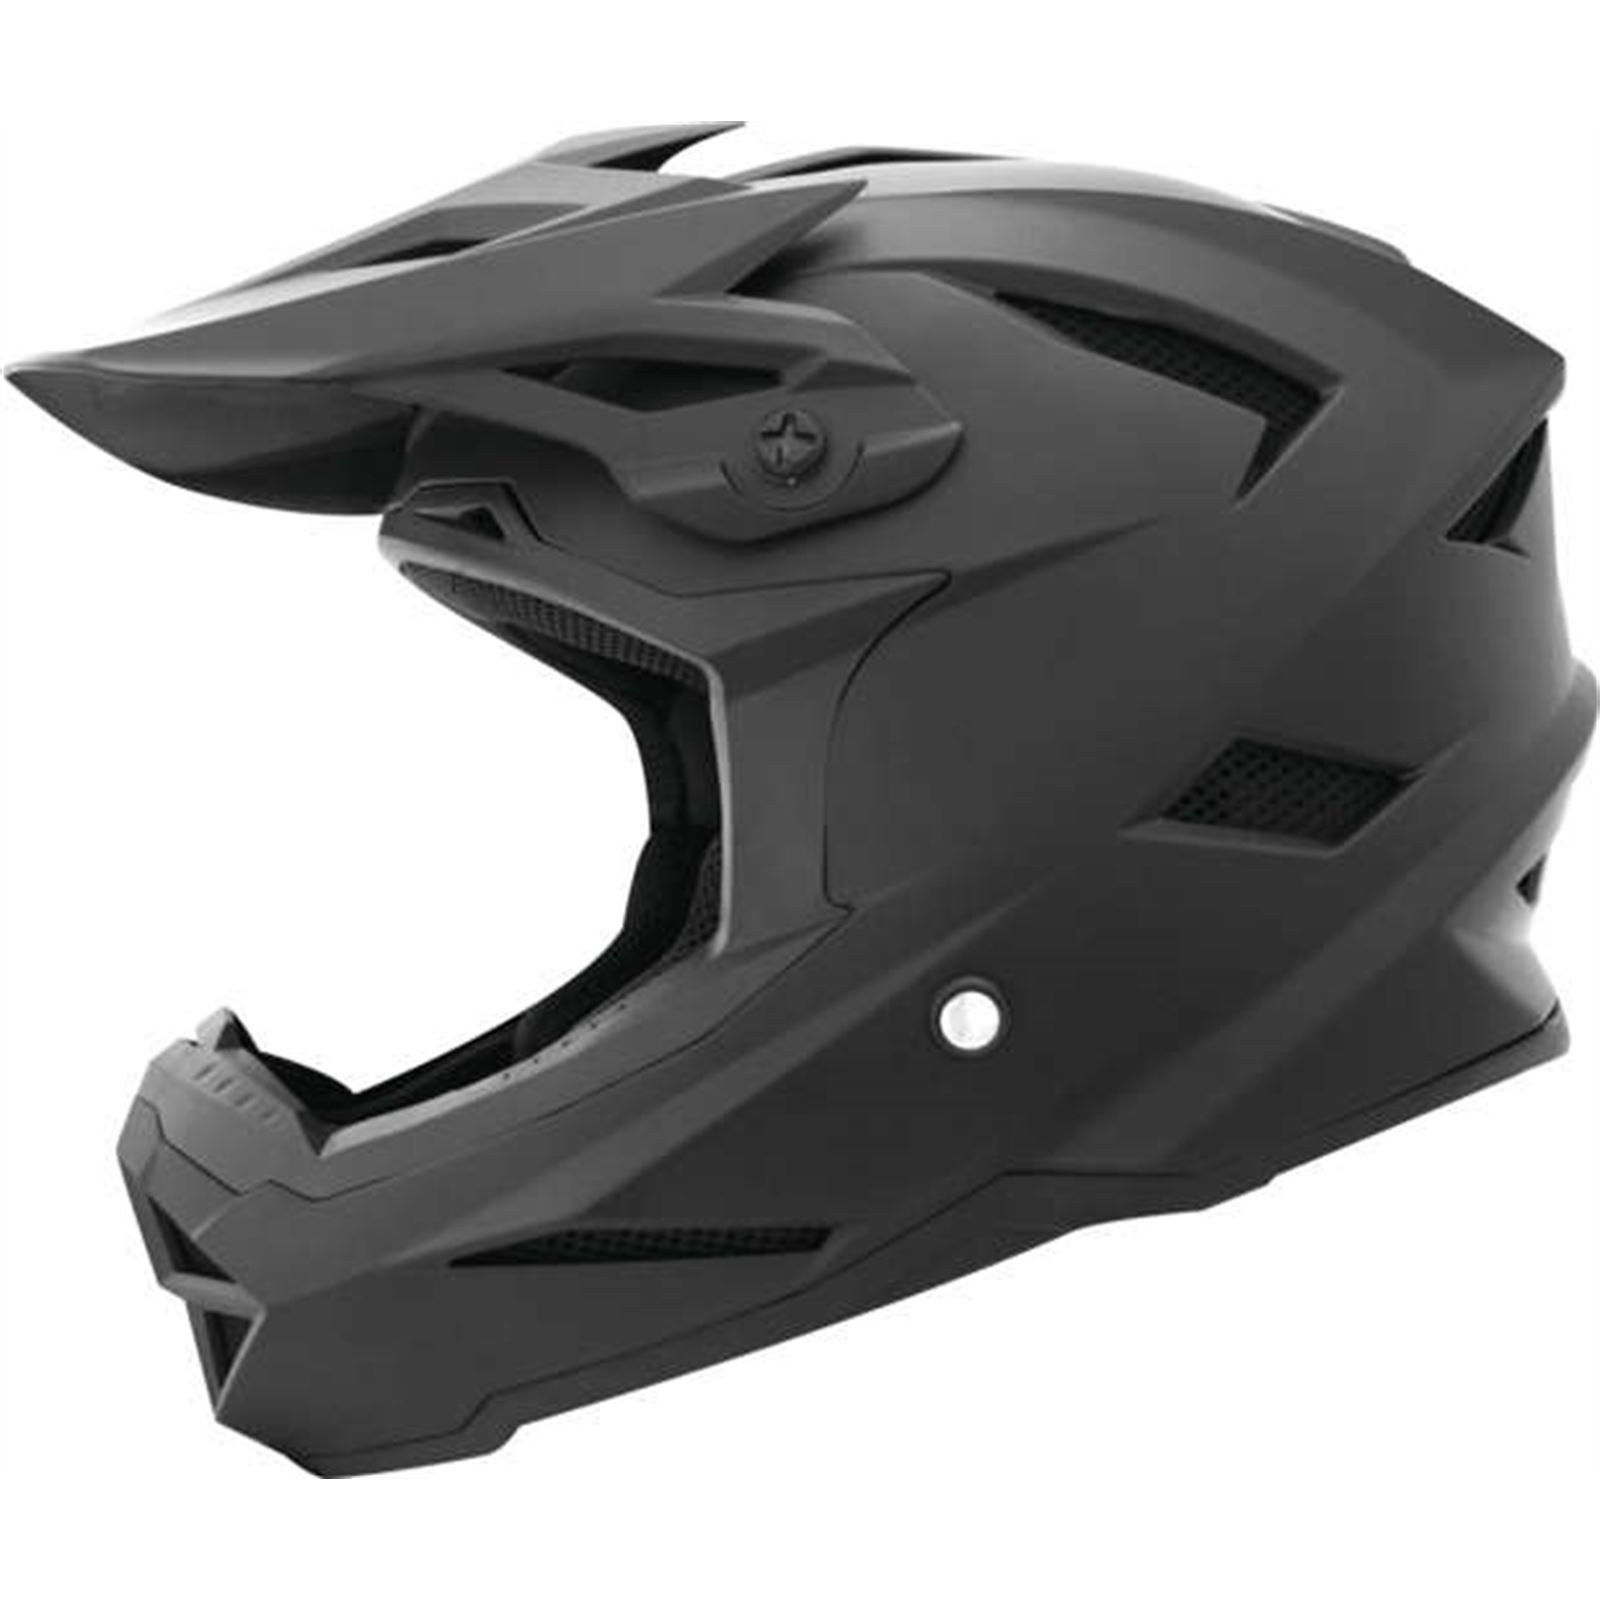 THH Helmets T-42 Solid Helmet Flat Black - Medium